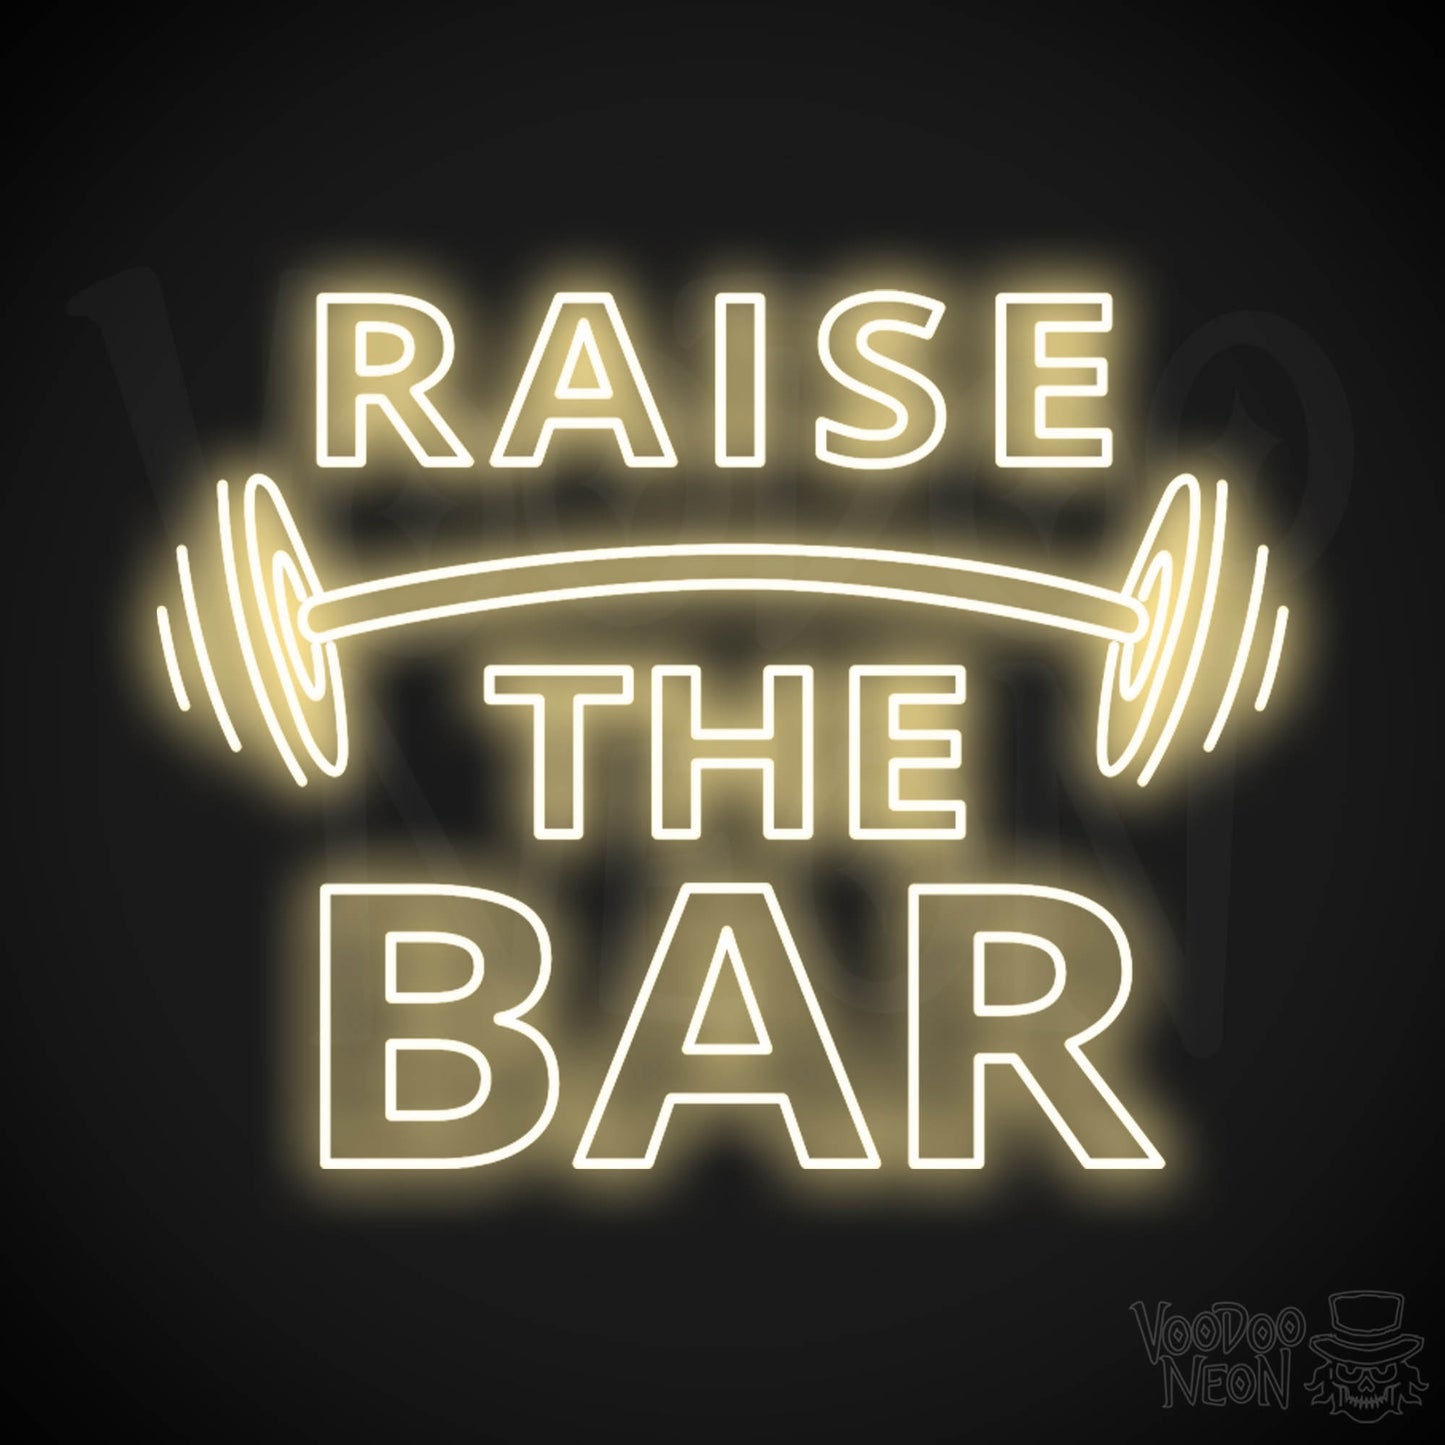 Raise The Bar LED Neon - Warm White